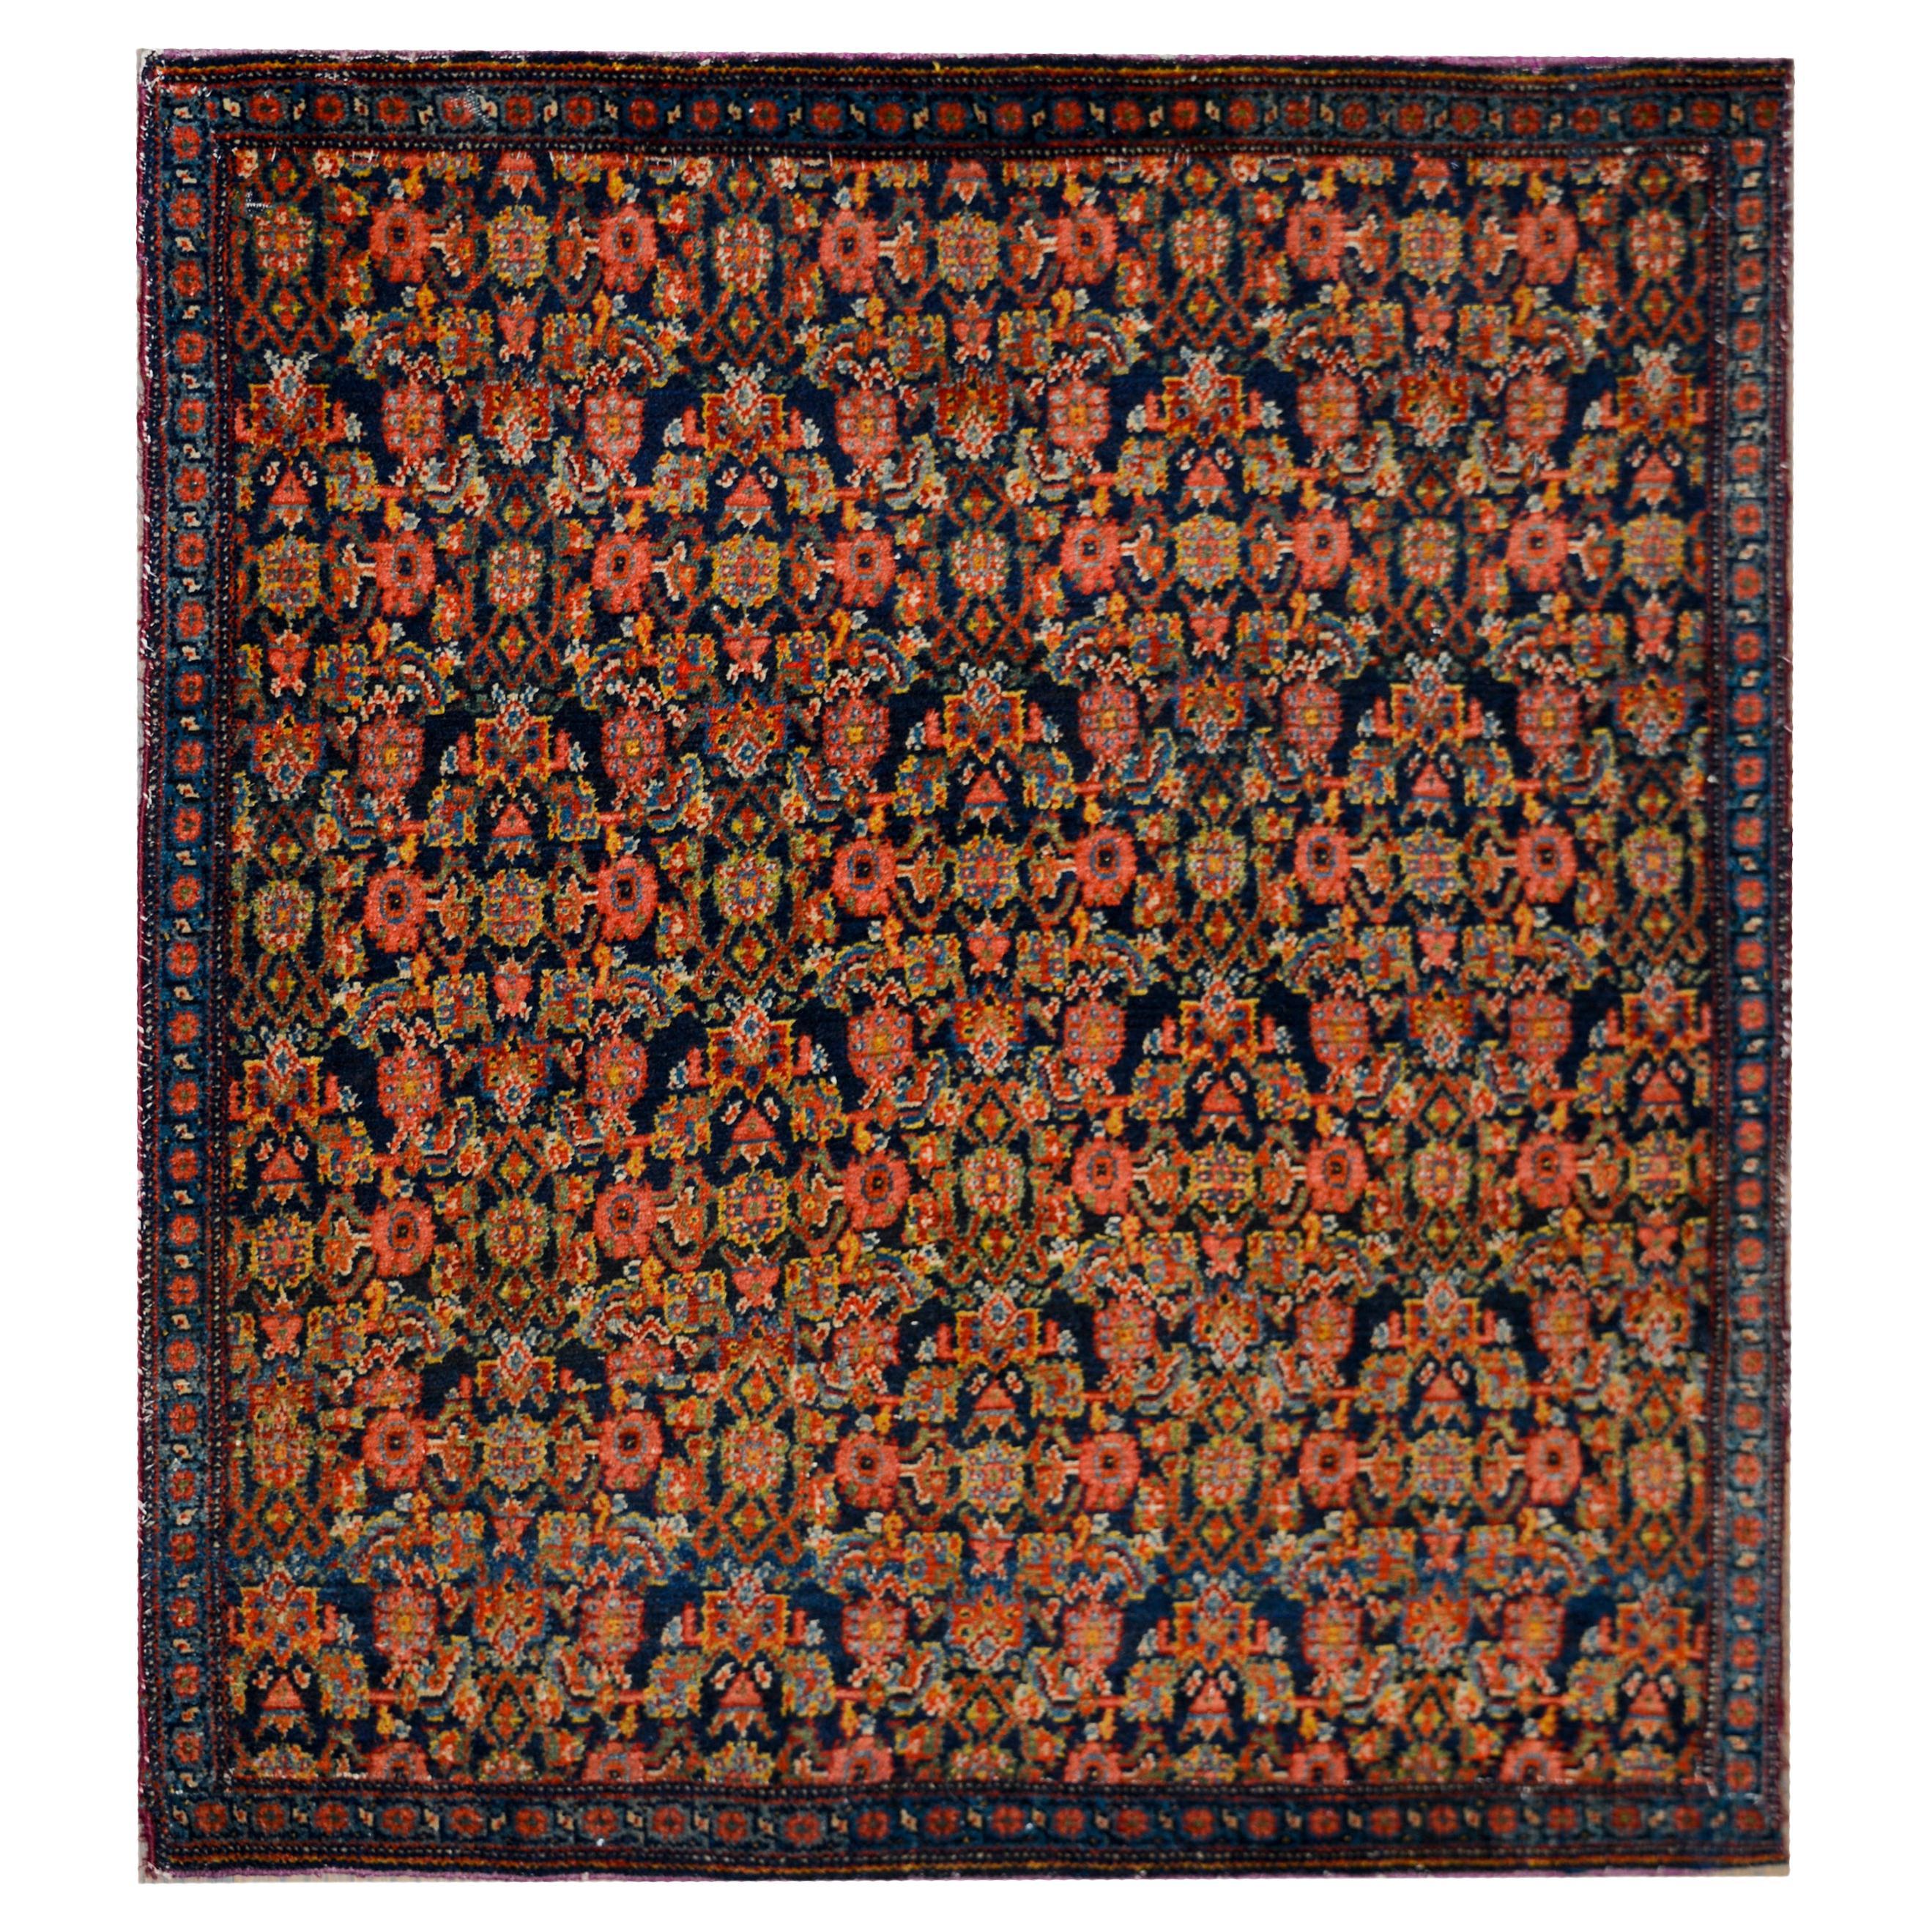 Early 20th Century Persian Senneh Rug